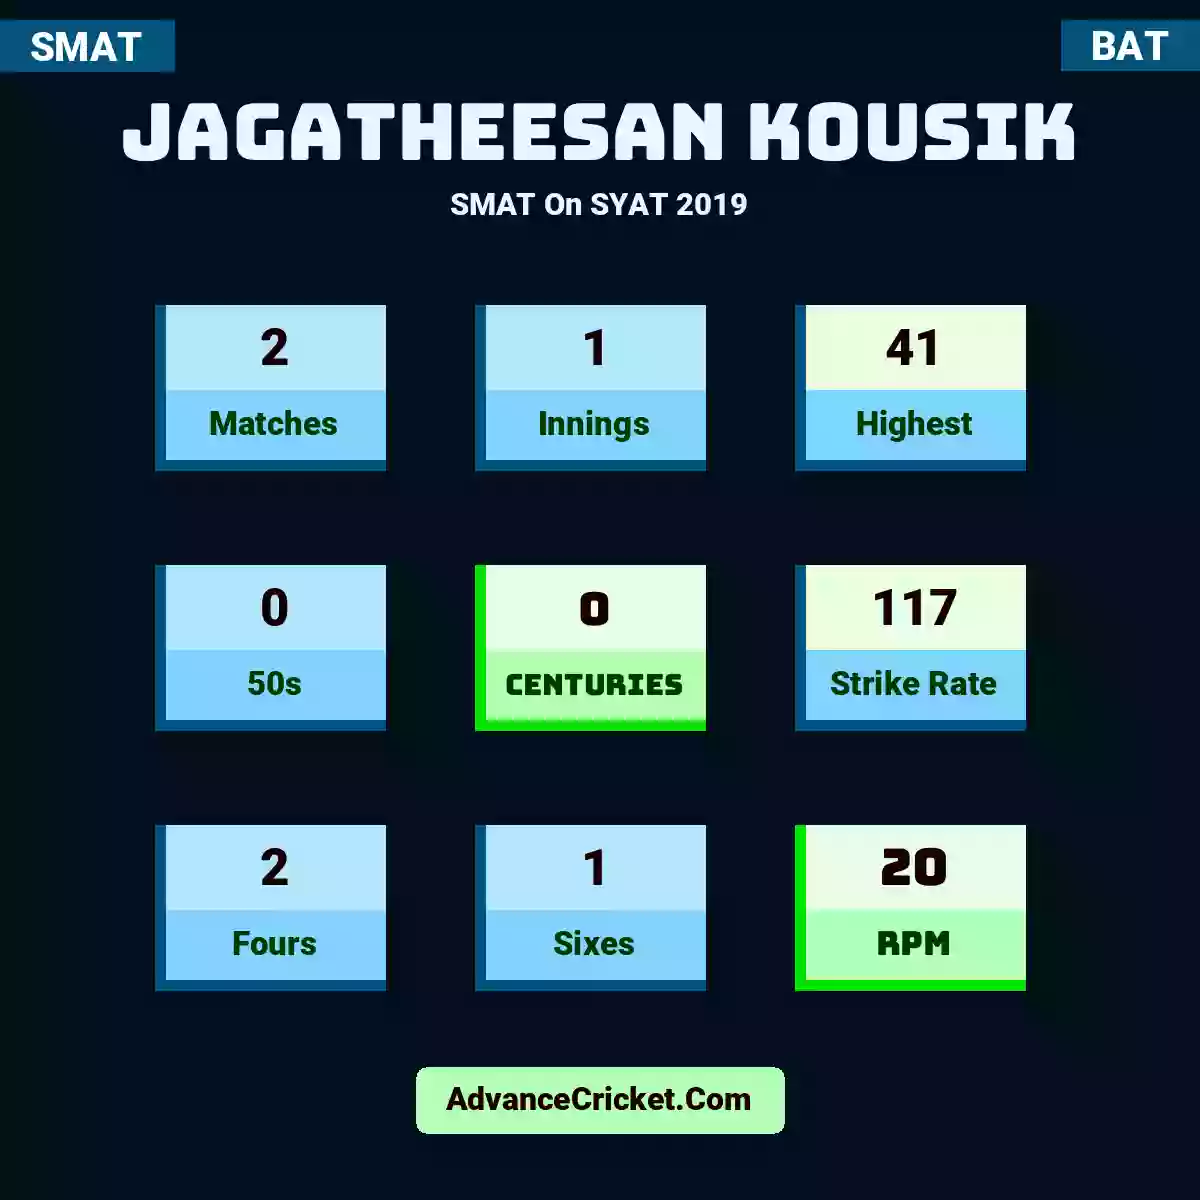 Jagatheesan Kousik SMAT  On SYAT 2019, Jagatheesan Kousik played 2 matches, scored 41 runs as highest, 0 half-centuries, and 0 centuries, with a strike rate of 117. J.Kousik hit 2 fours and 1 sixes, with an RPM of 20.